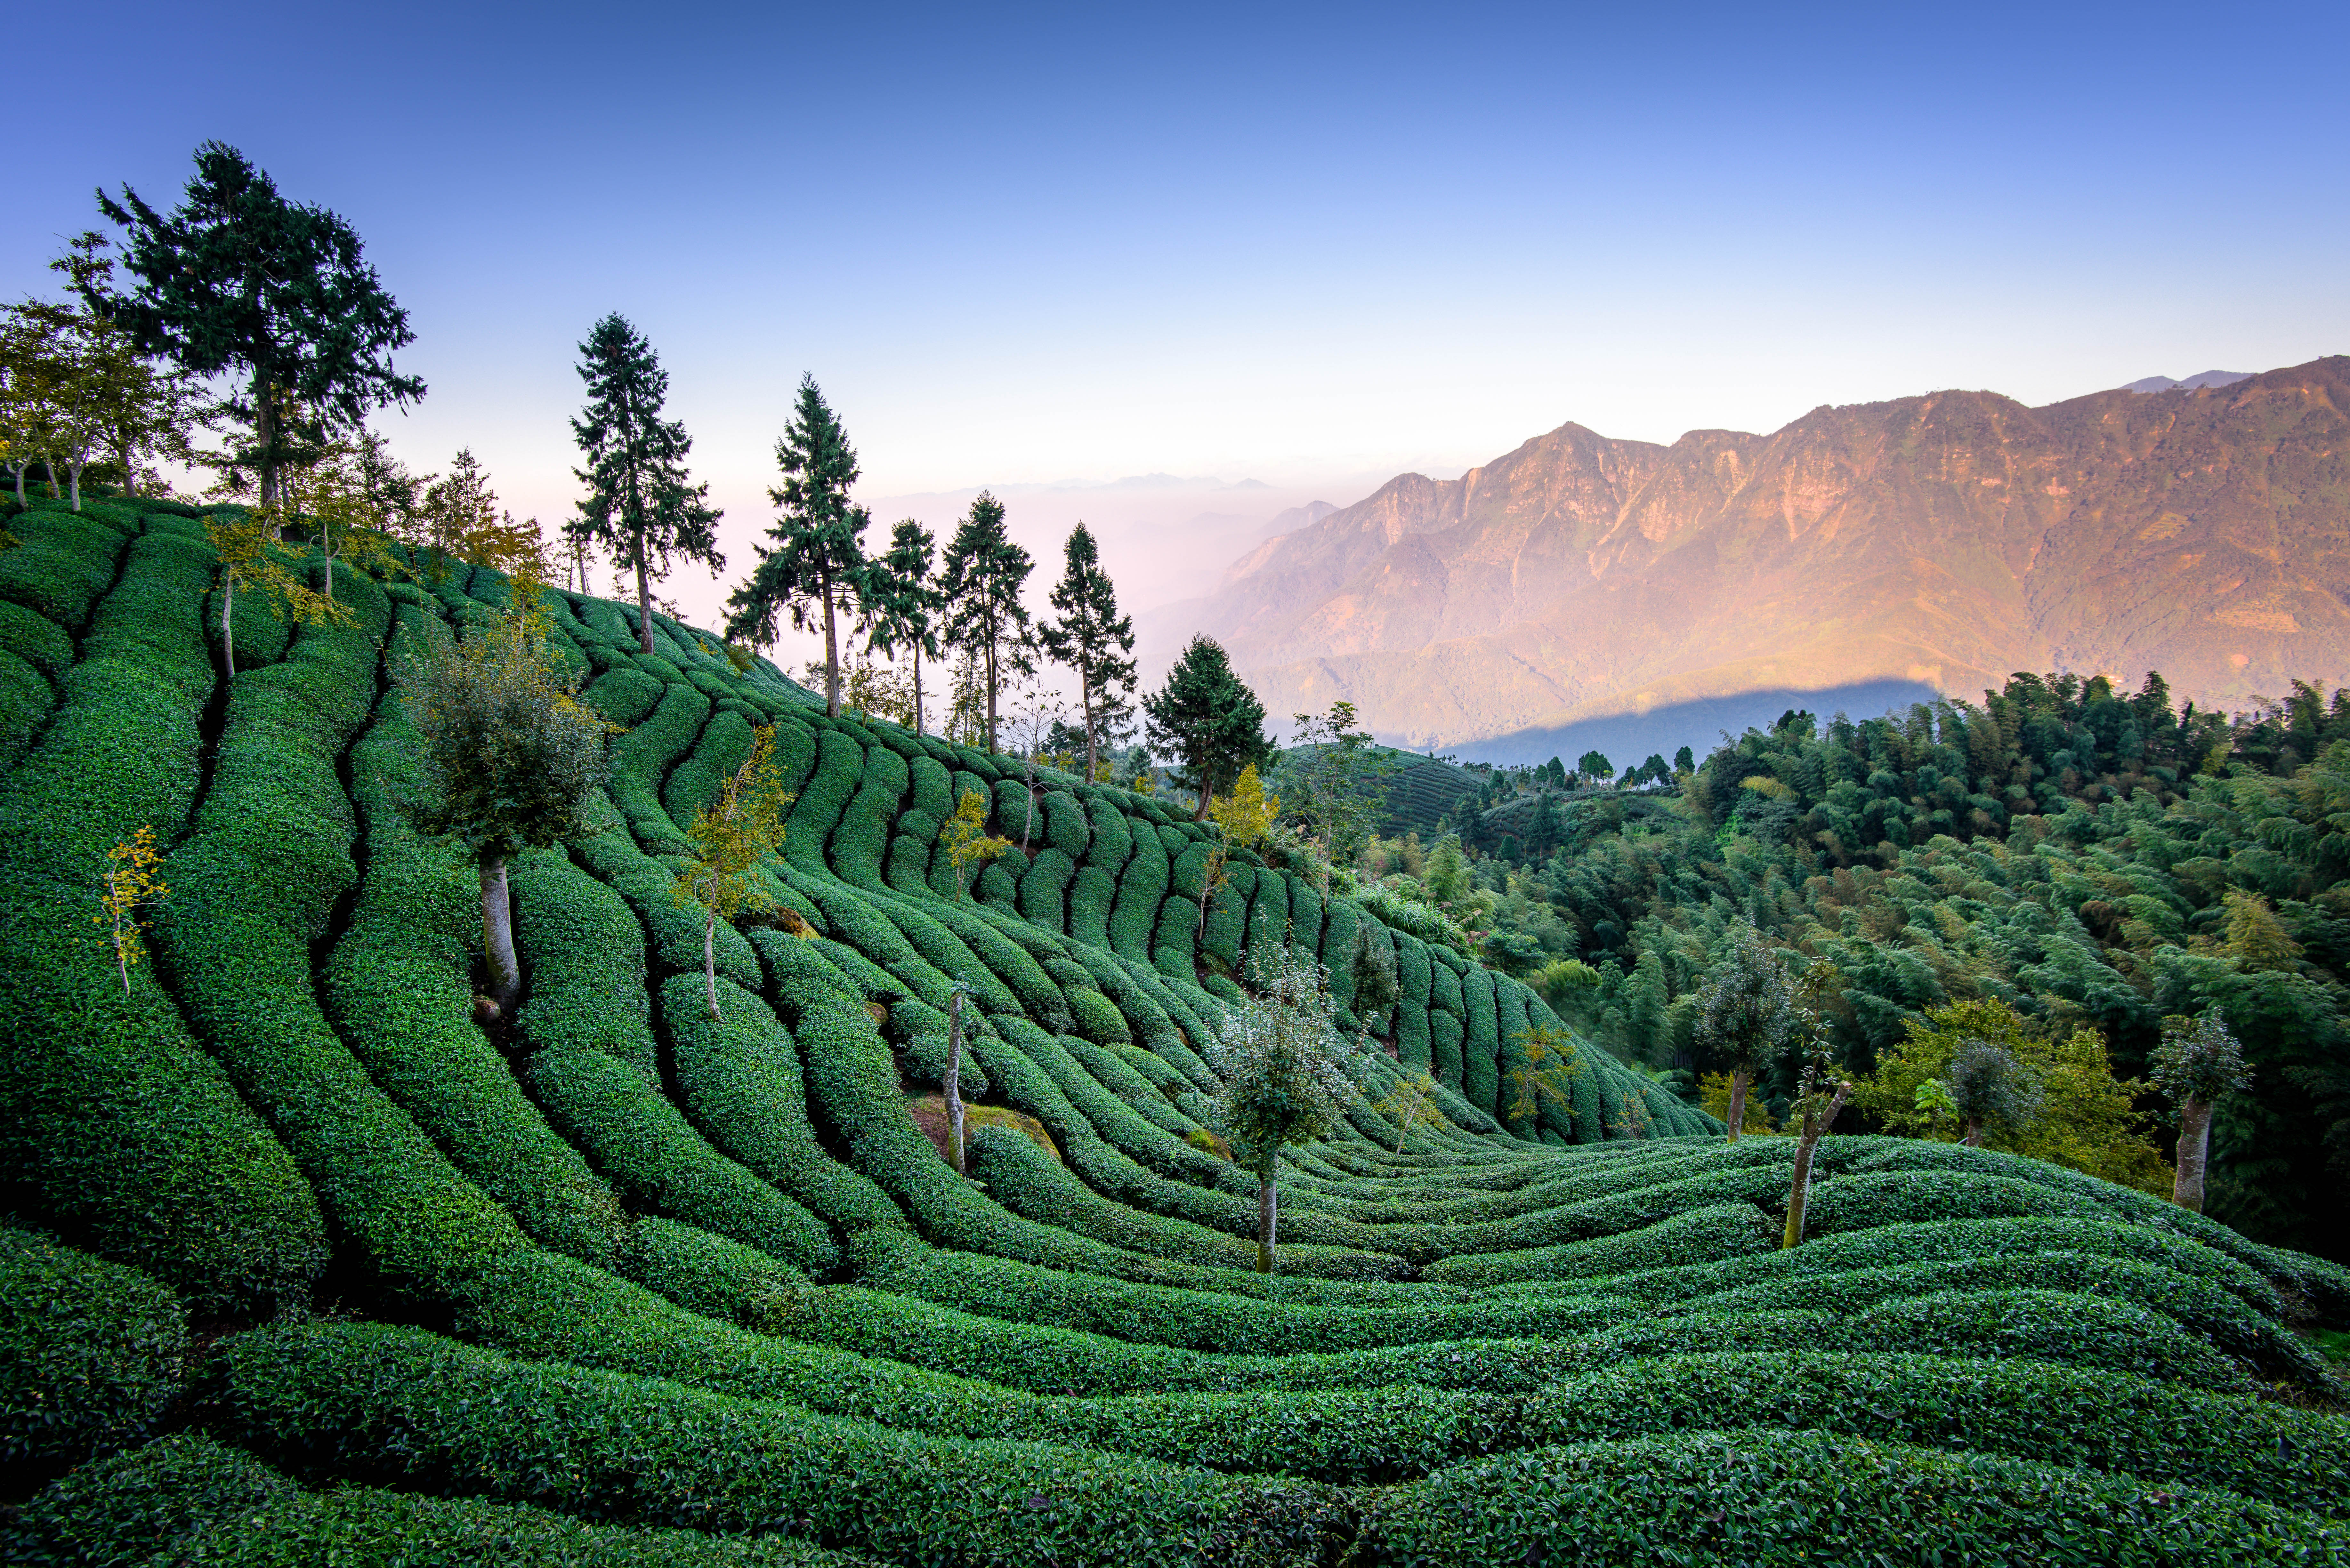 greenery, tea plantation, man made, landscape, mountain, nature, tree